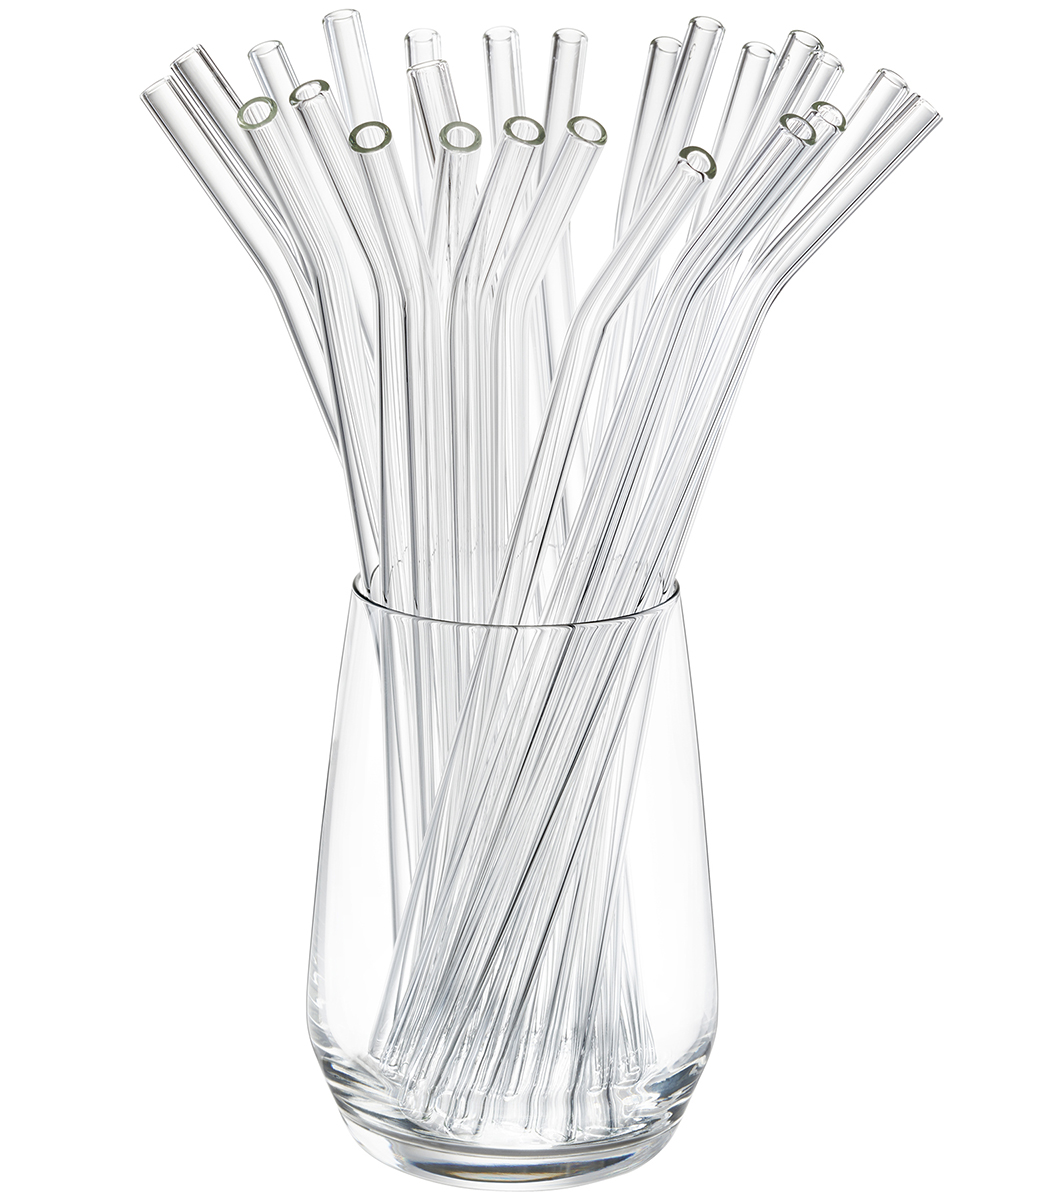 Glass Straw FUTURE, set of 25, 23 cm transparent, 2 brushes inclusive